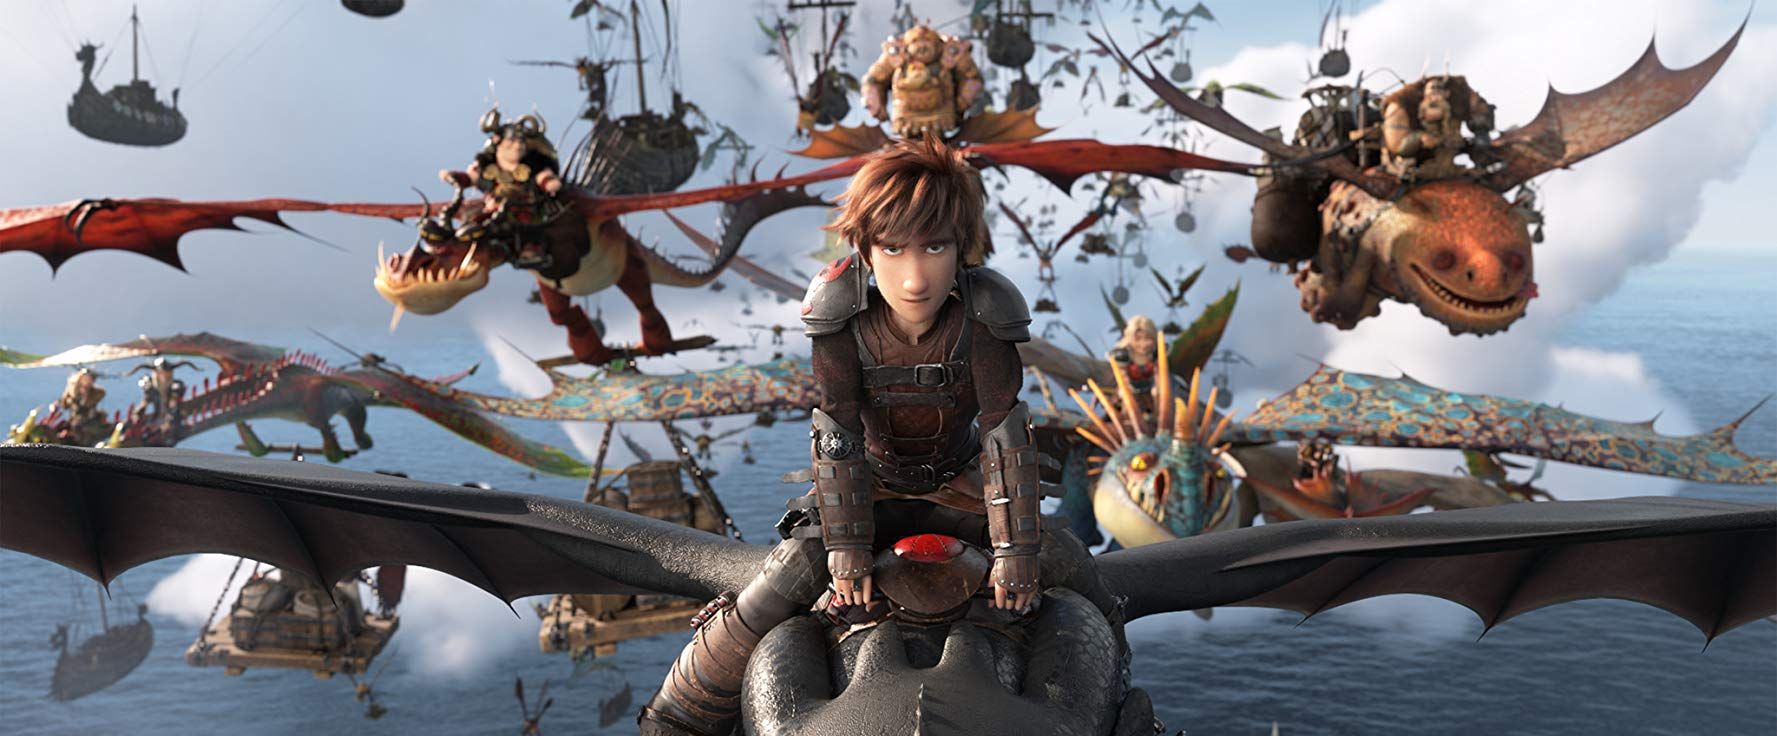 DreamWorks Head of Character Animation on Life Under Comcast und zukünftige Filme in Kürze